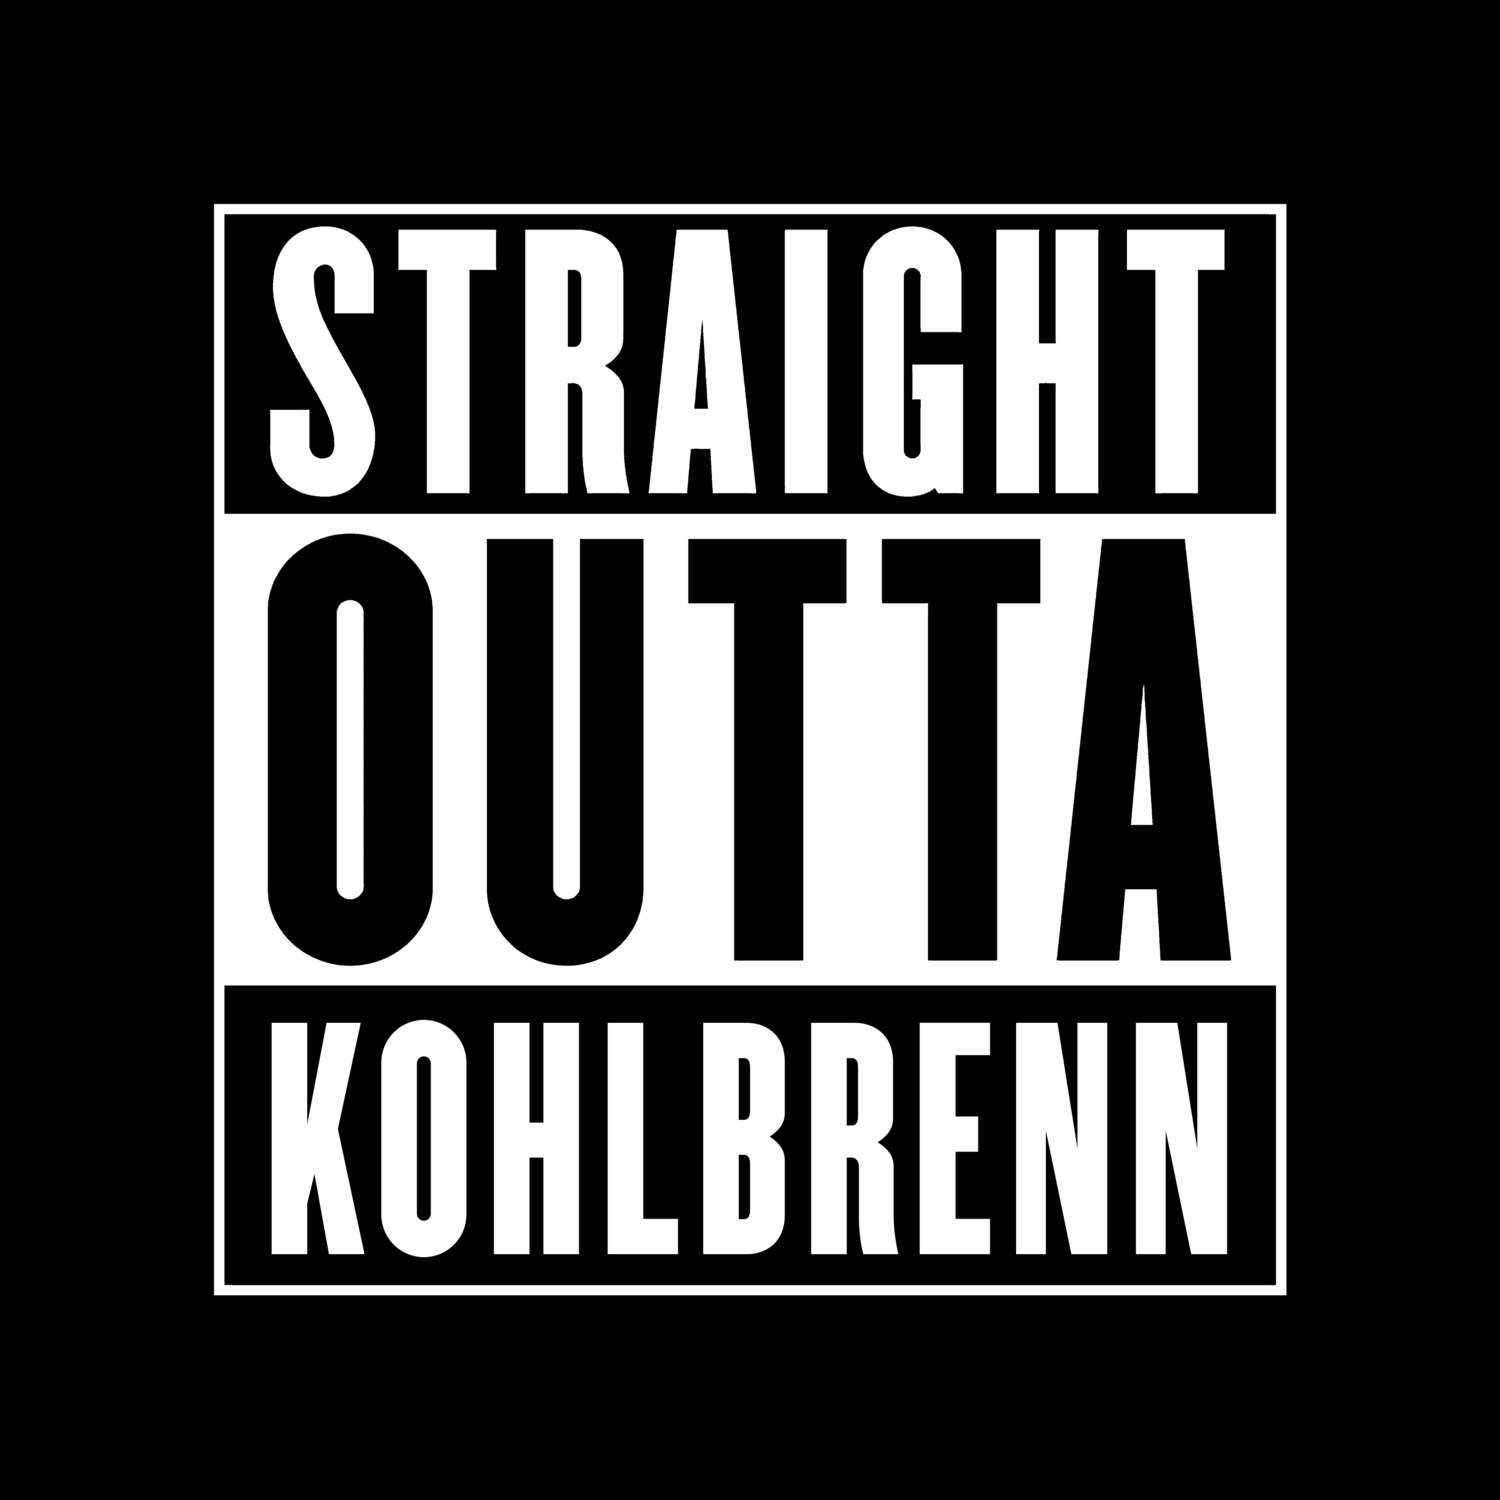 Kohlbrenn T-Shirt »Straight Outta«